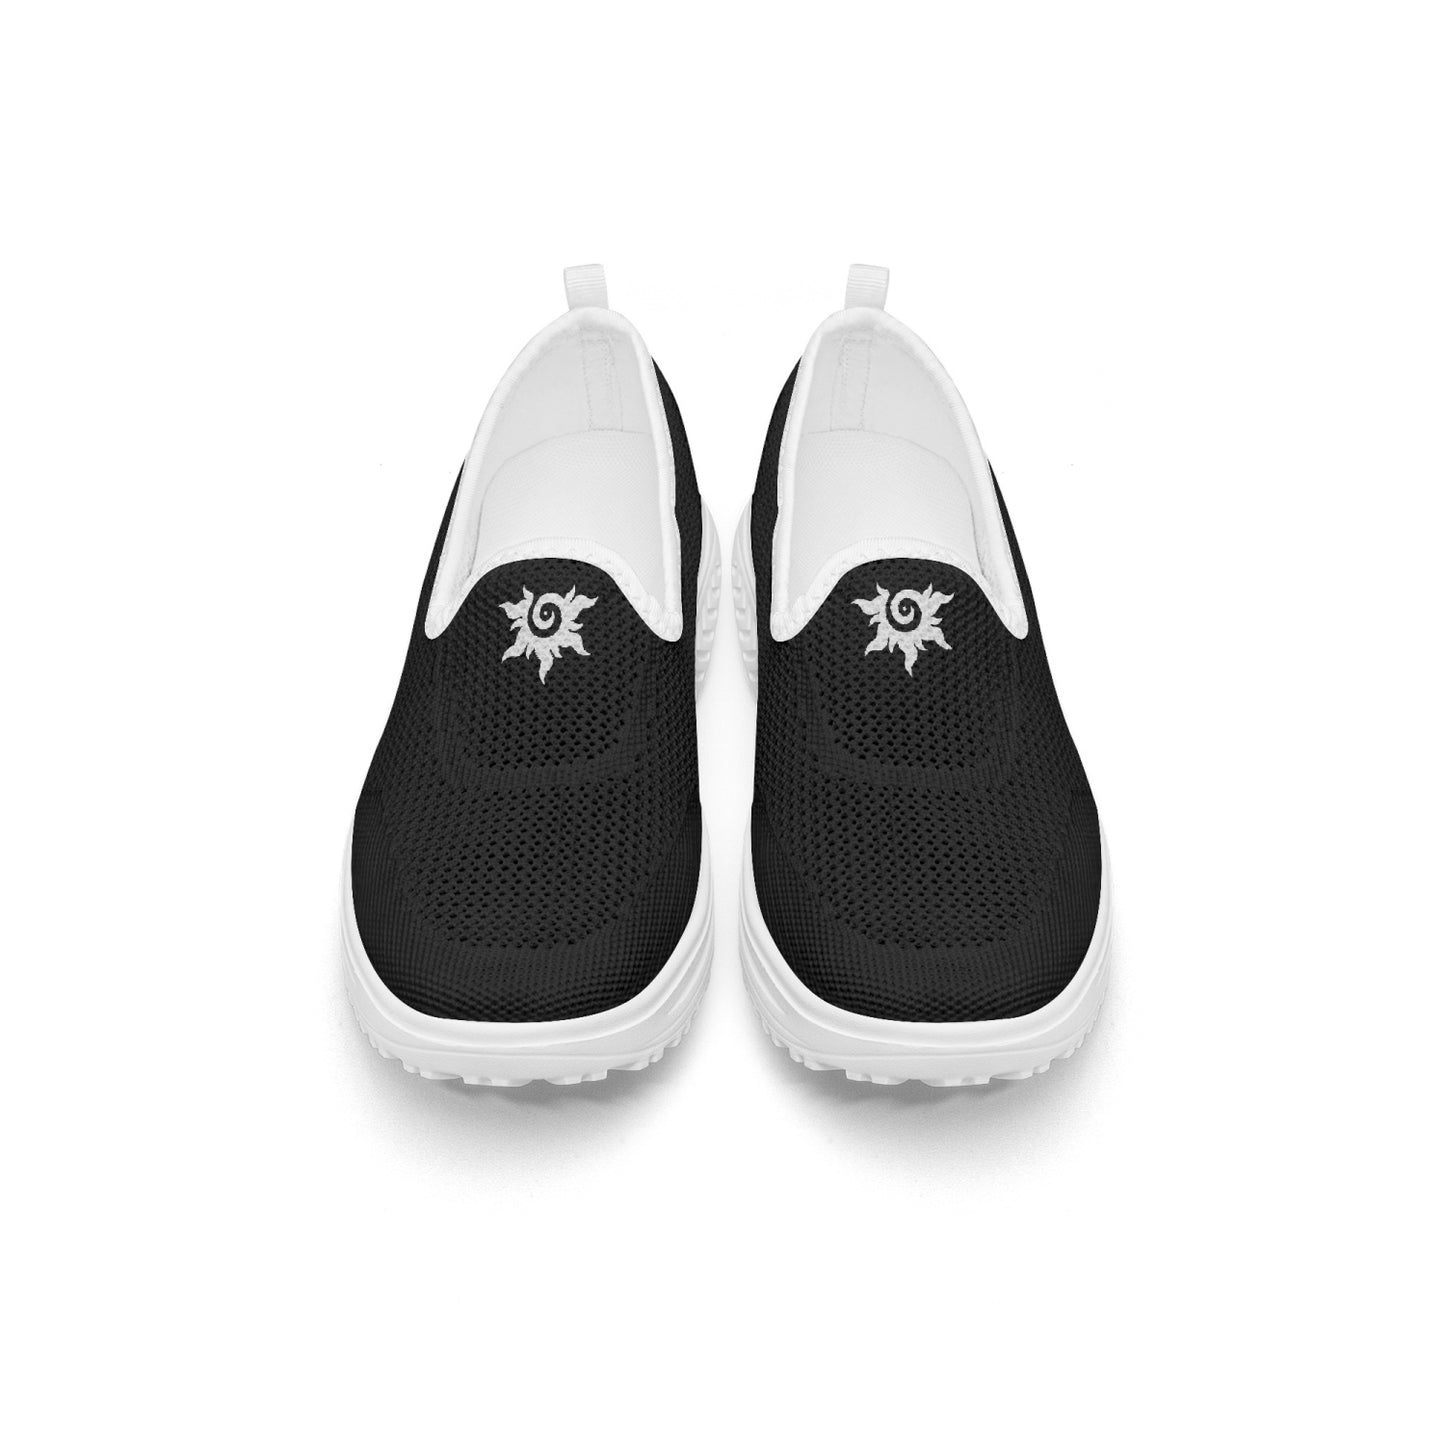 Women's Slip-On Mesh Rocking Shoes - Black